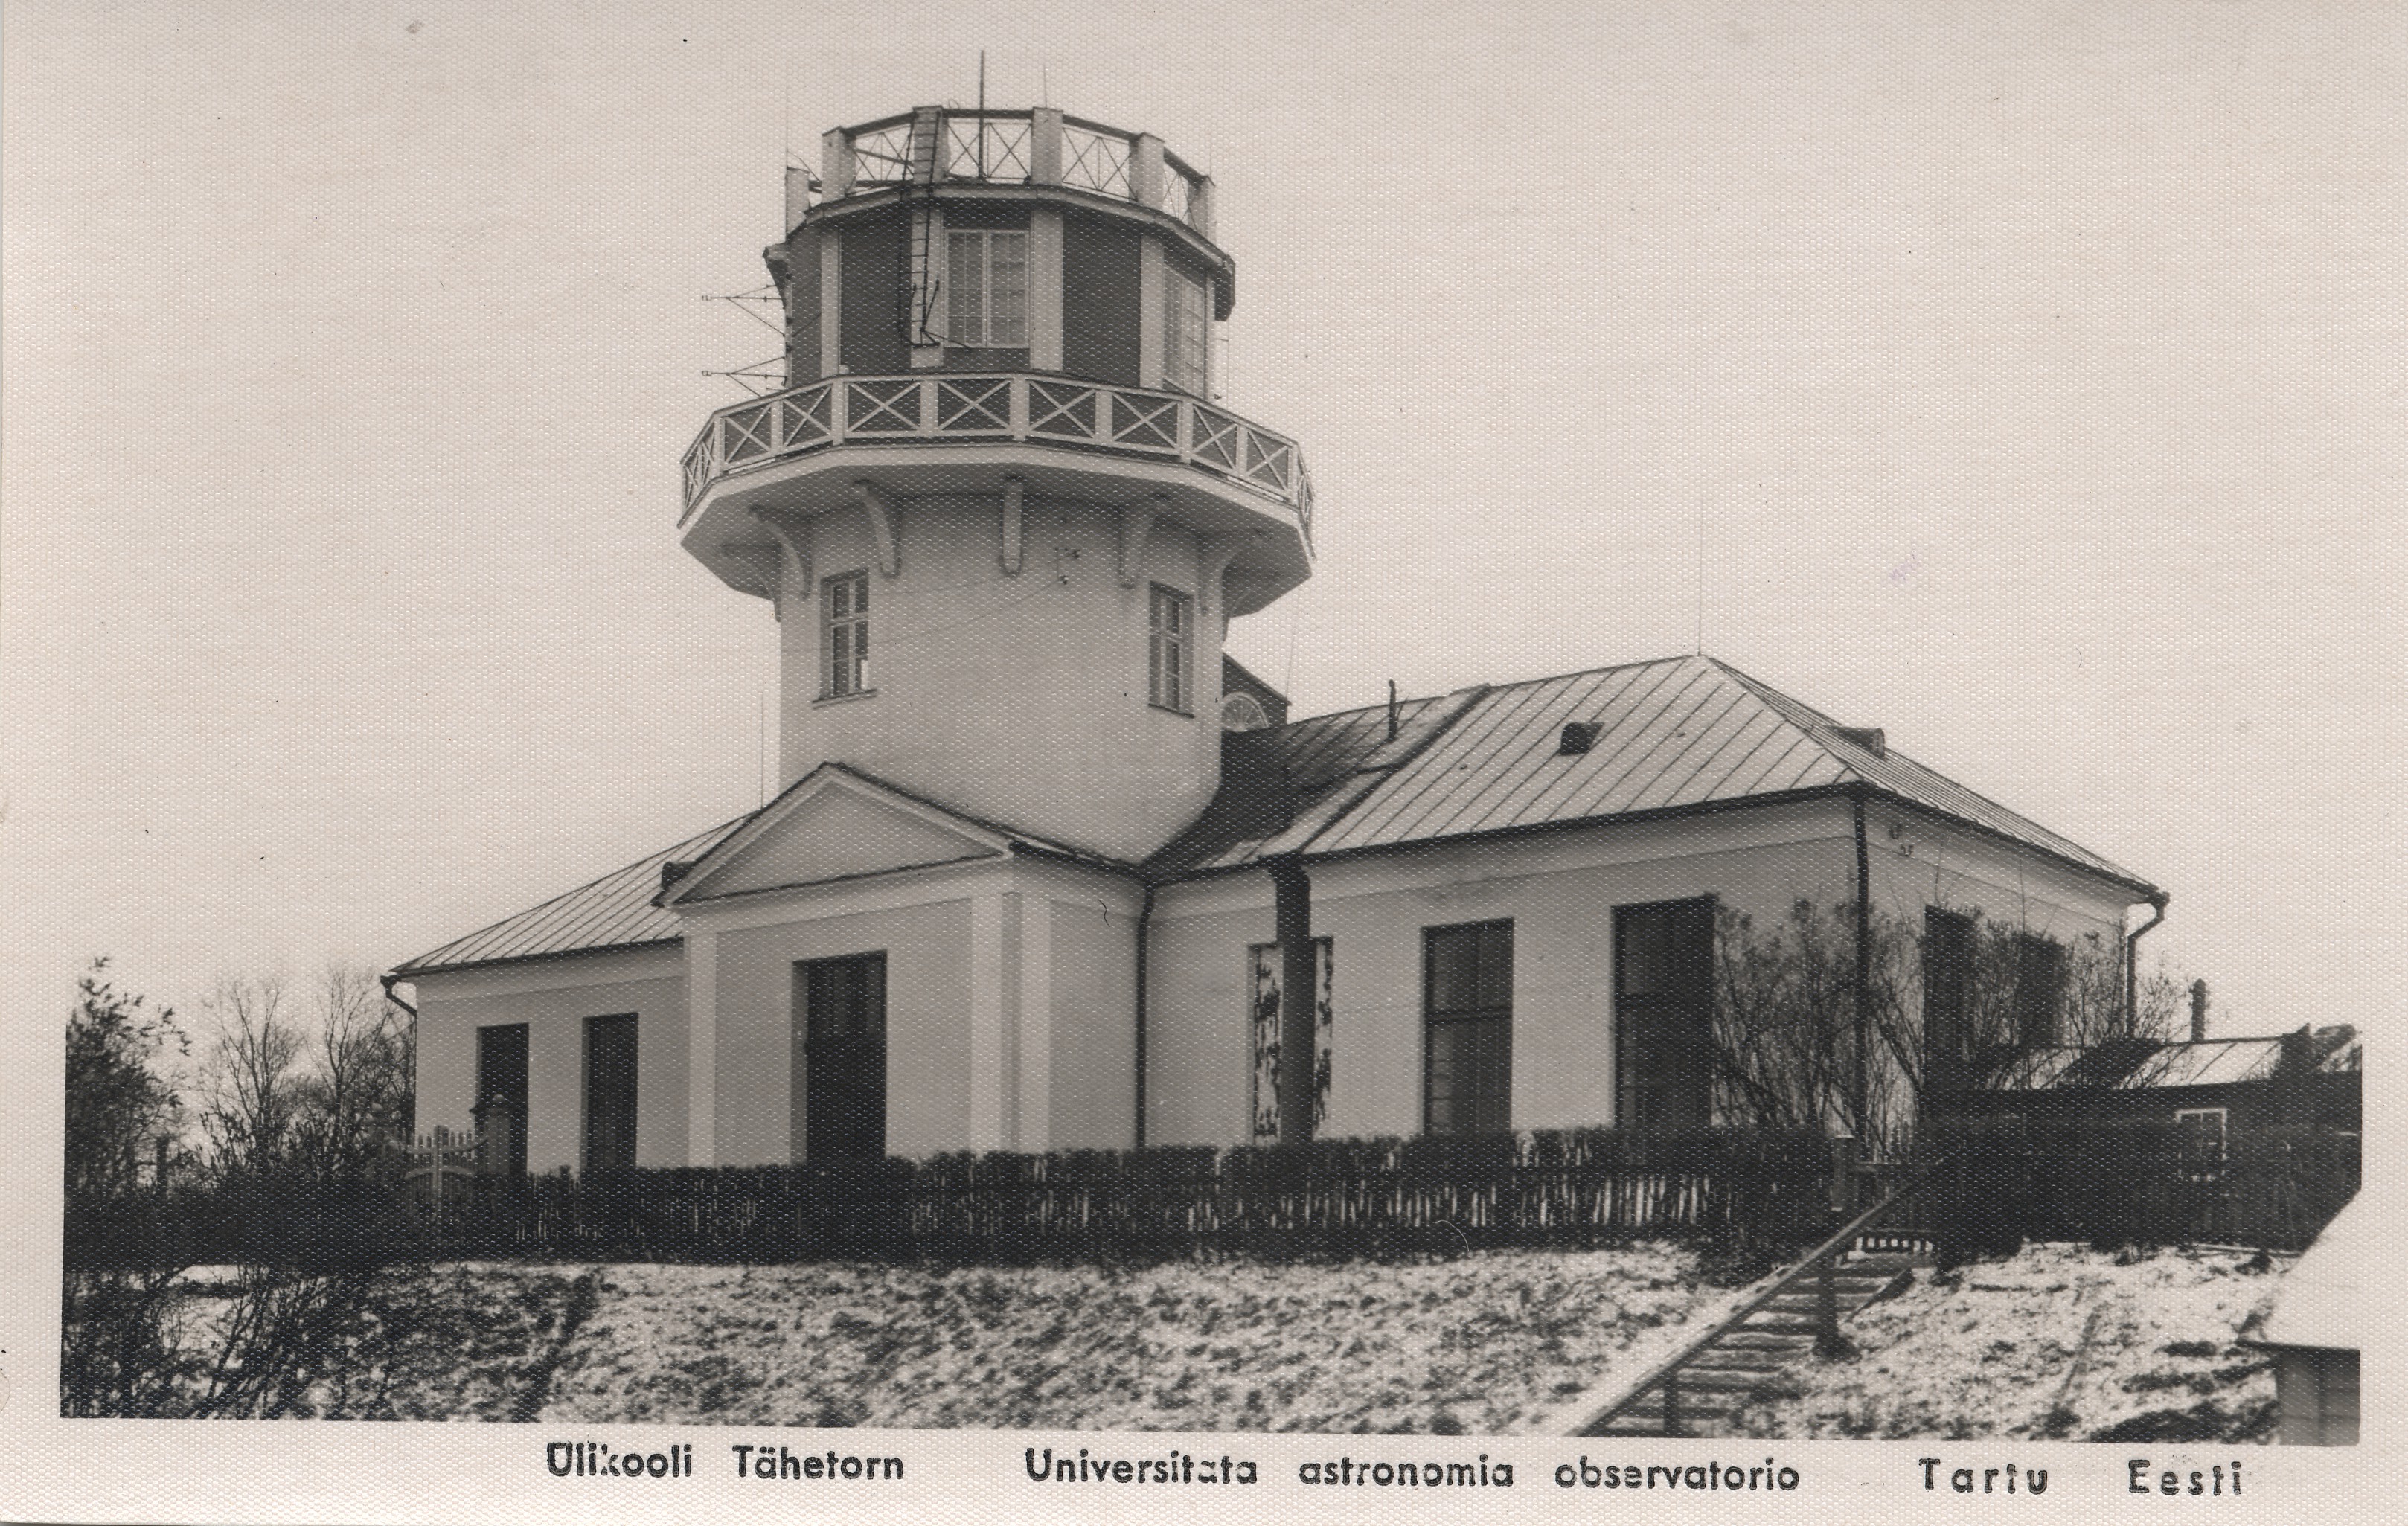 Tartu Estonia : University Star Tower = Universitata Astronomy Observatory